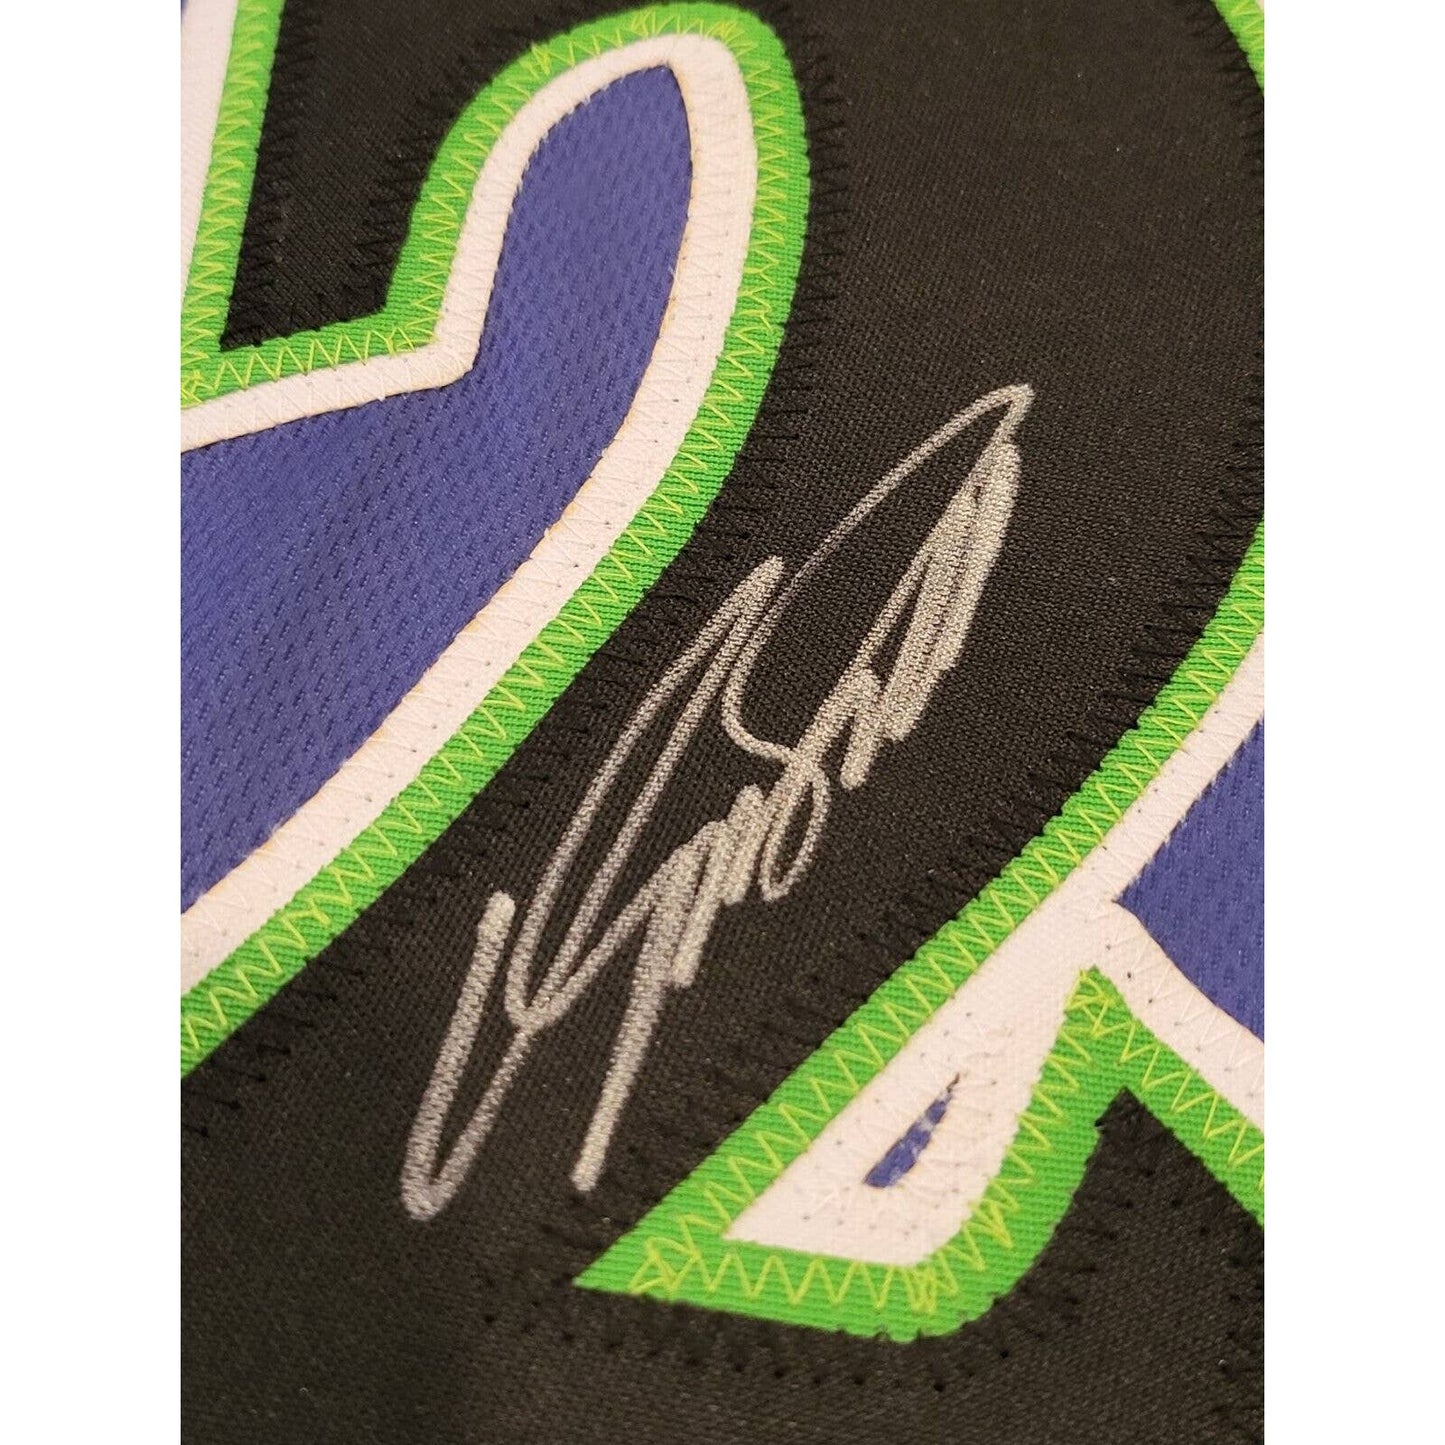 Dominique Wilkins Autographed/Signed Jersey Atlanta Hawks